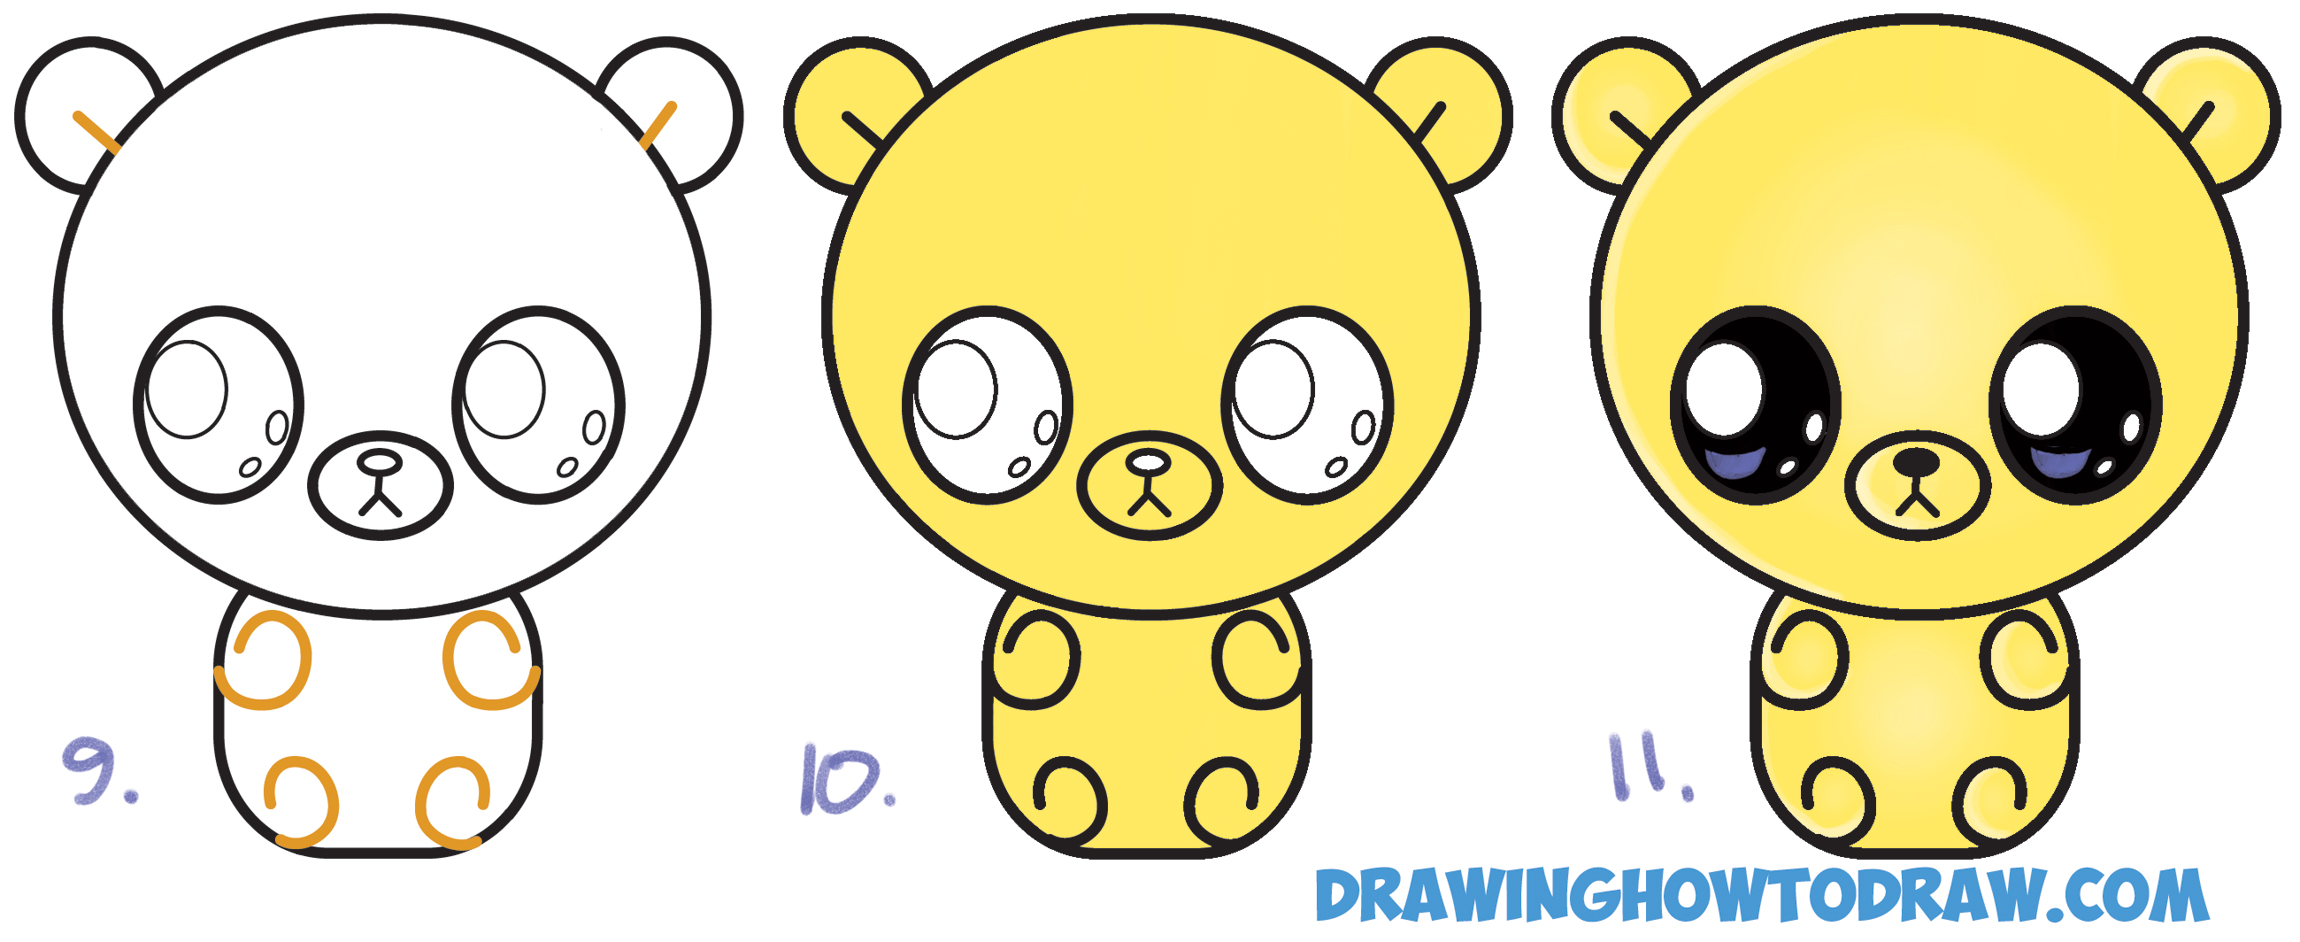 How To Draw A Cute Chibi Kawaii Cartoon Gummy Bear Easy Step By